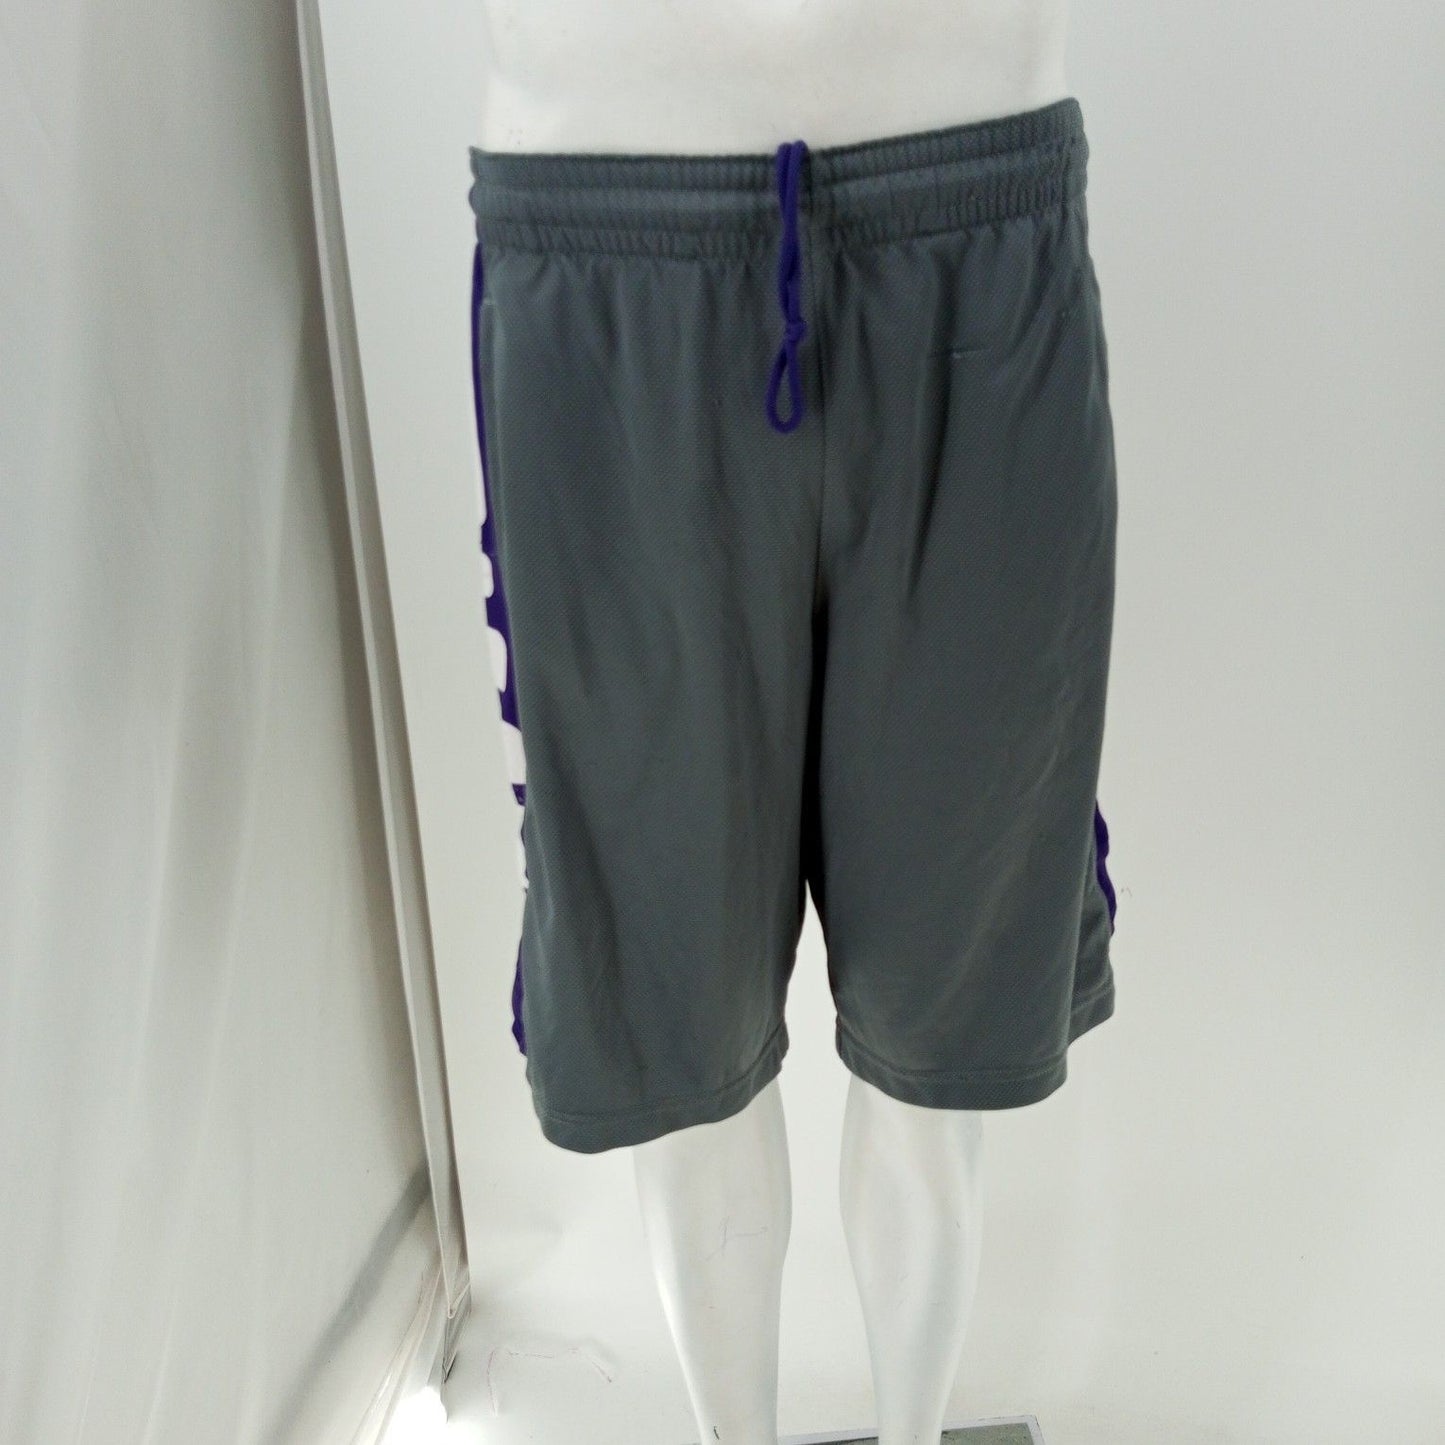 Jordan Nike Adidas Champion Reebok Athletic Mens Shorts 30 item box